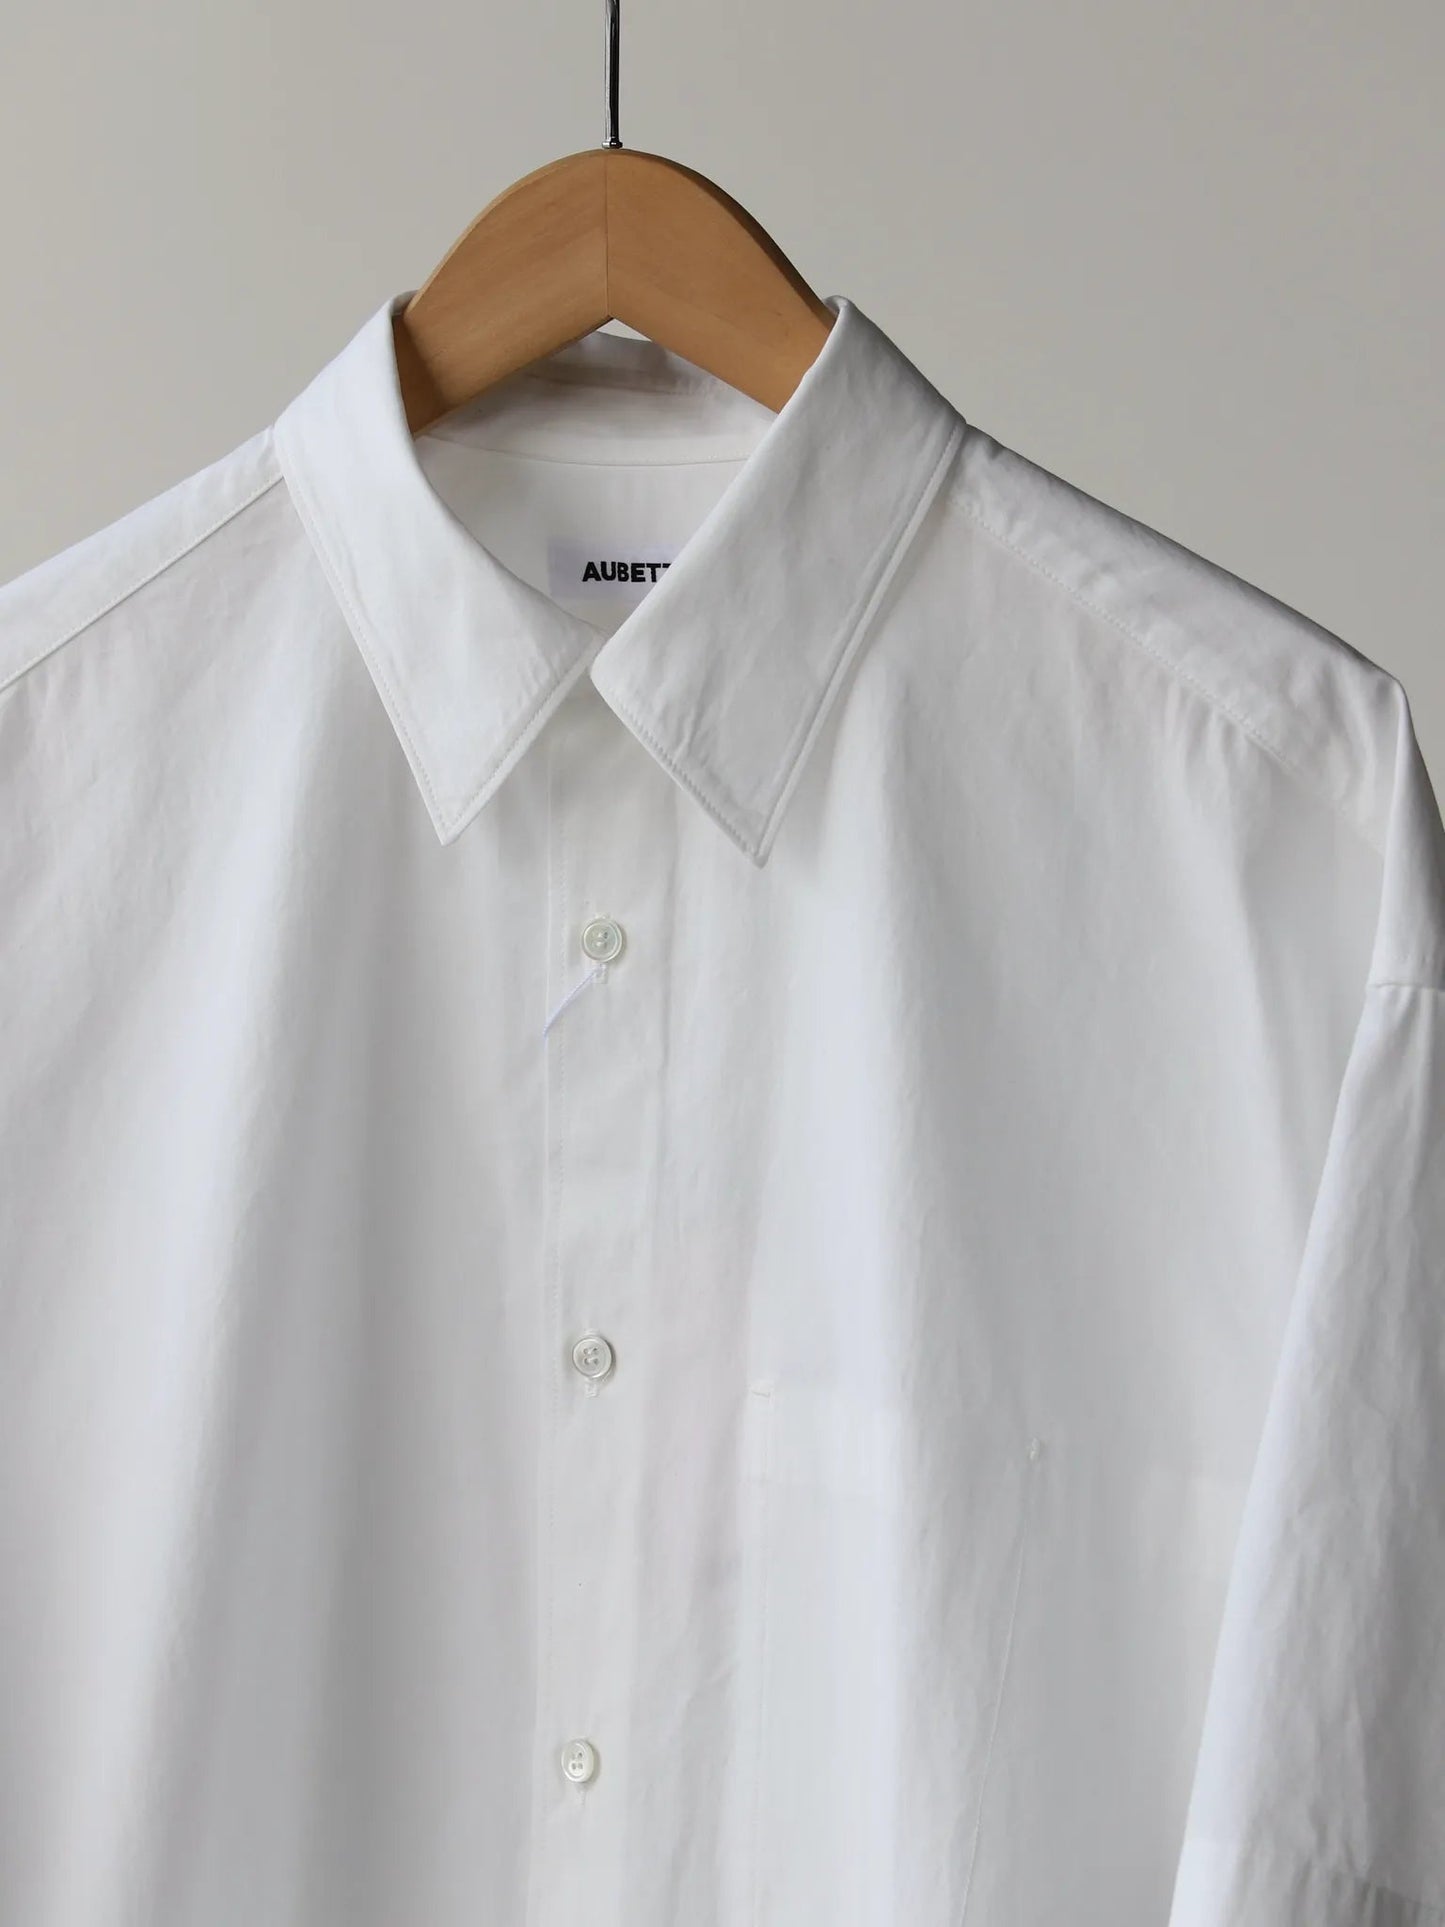 aubett-heavy-broad-oversized-short-sleeve-shirt-white-2